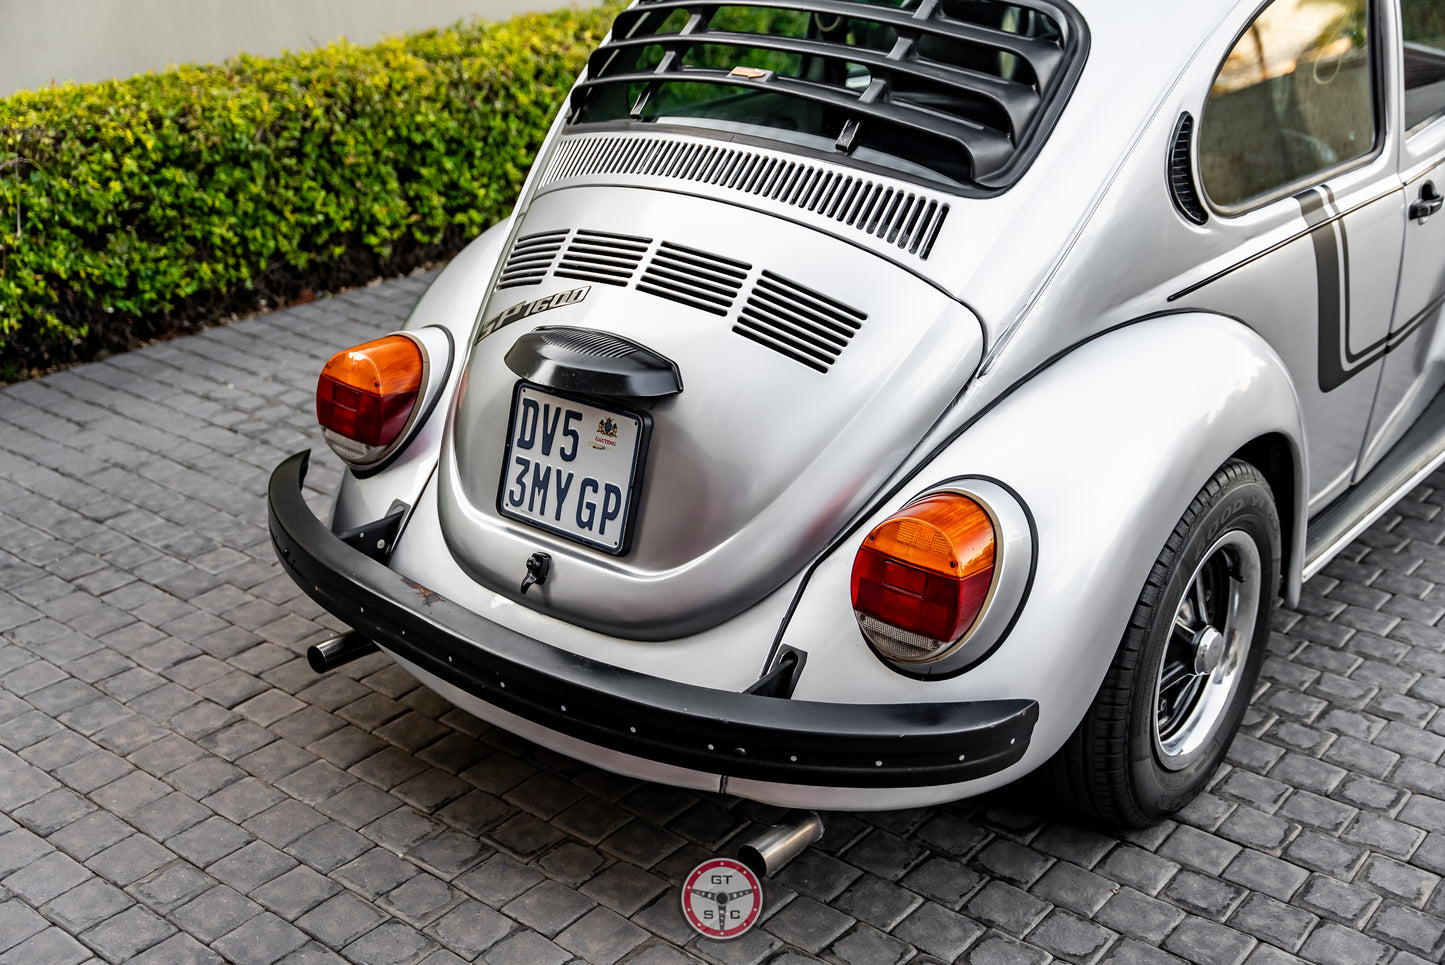 1977 VW Beetle SP